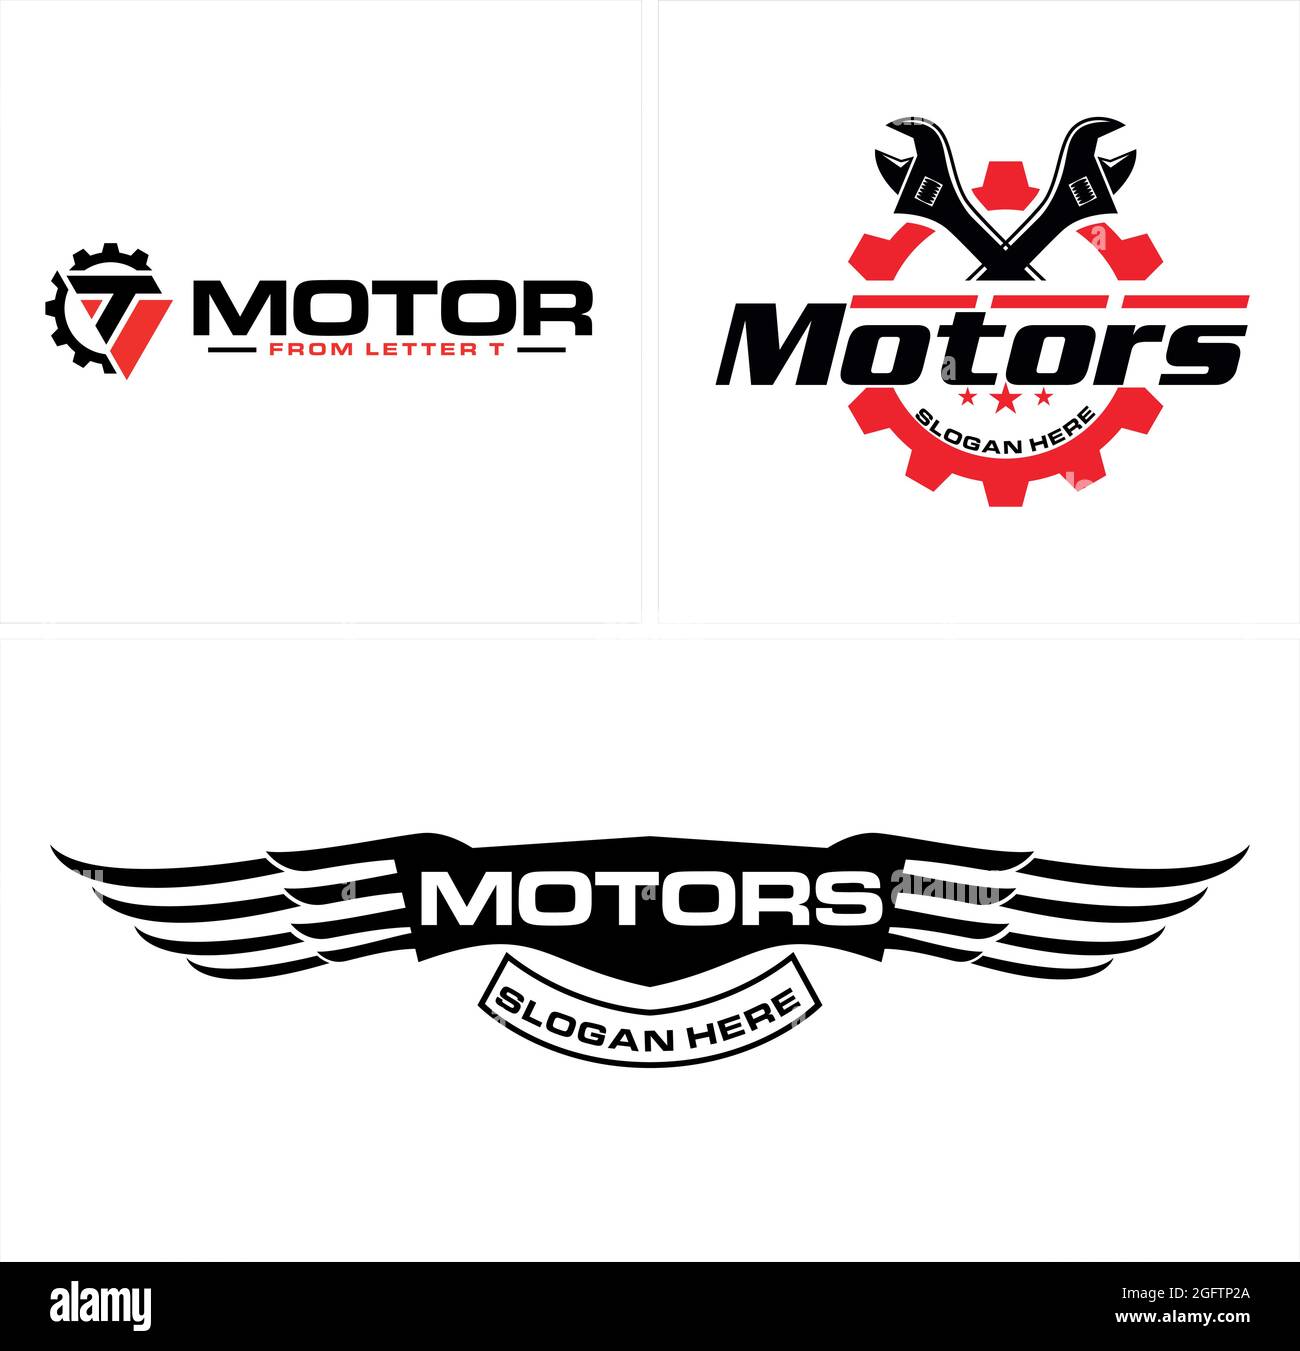 Automotive service motors garage logo design Stock Vector